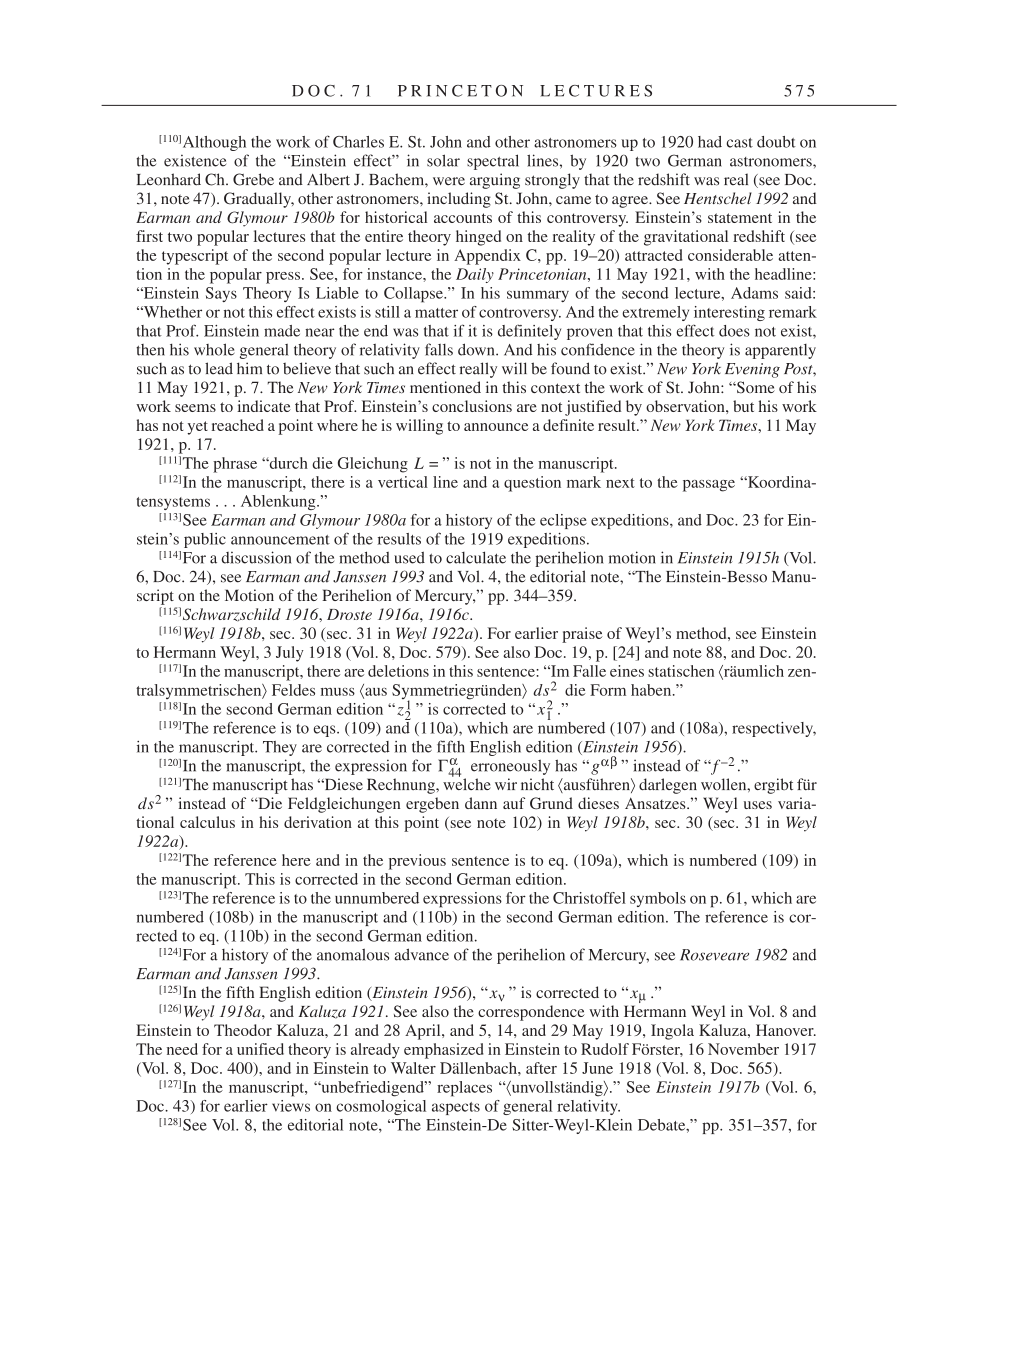 Volume 7: The Berlin Years: Writings, 1918-1921 page 575